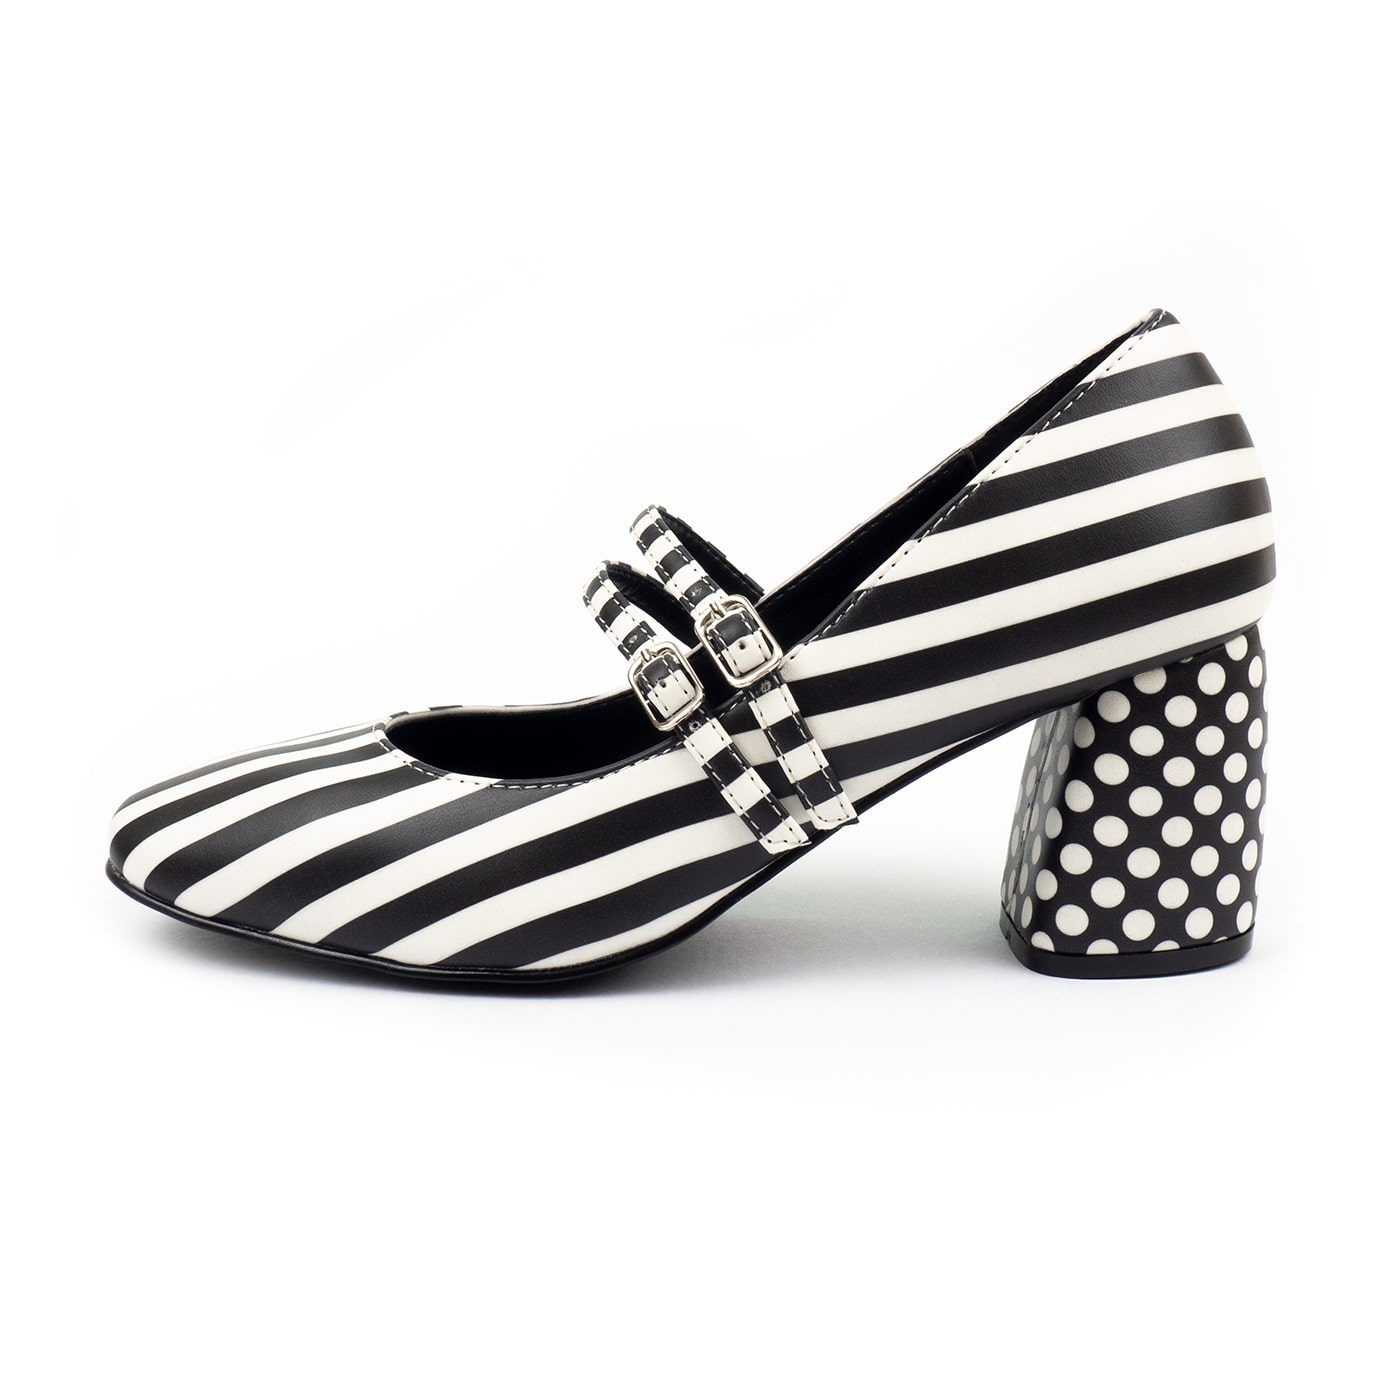 Monochrome Heels by RainbowsAndFairies.com (Black & White Stripes - Polka Dots - Classic - Kitten Heels - Mismatched Shoes) - SKU: FW_HEELS_MONOC_ORG - Pic 03